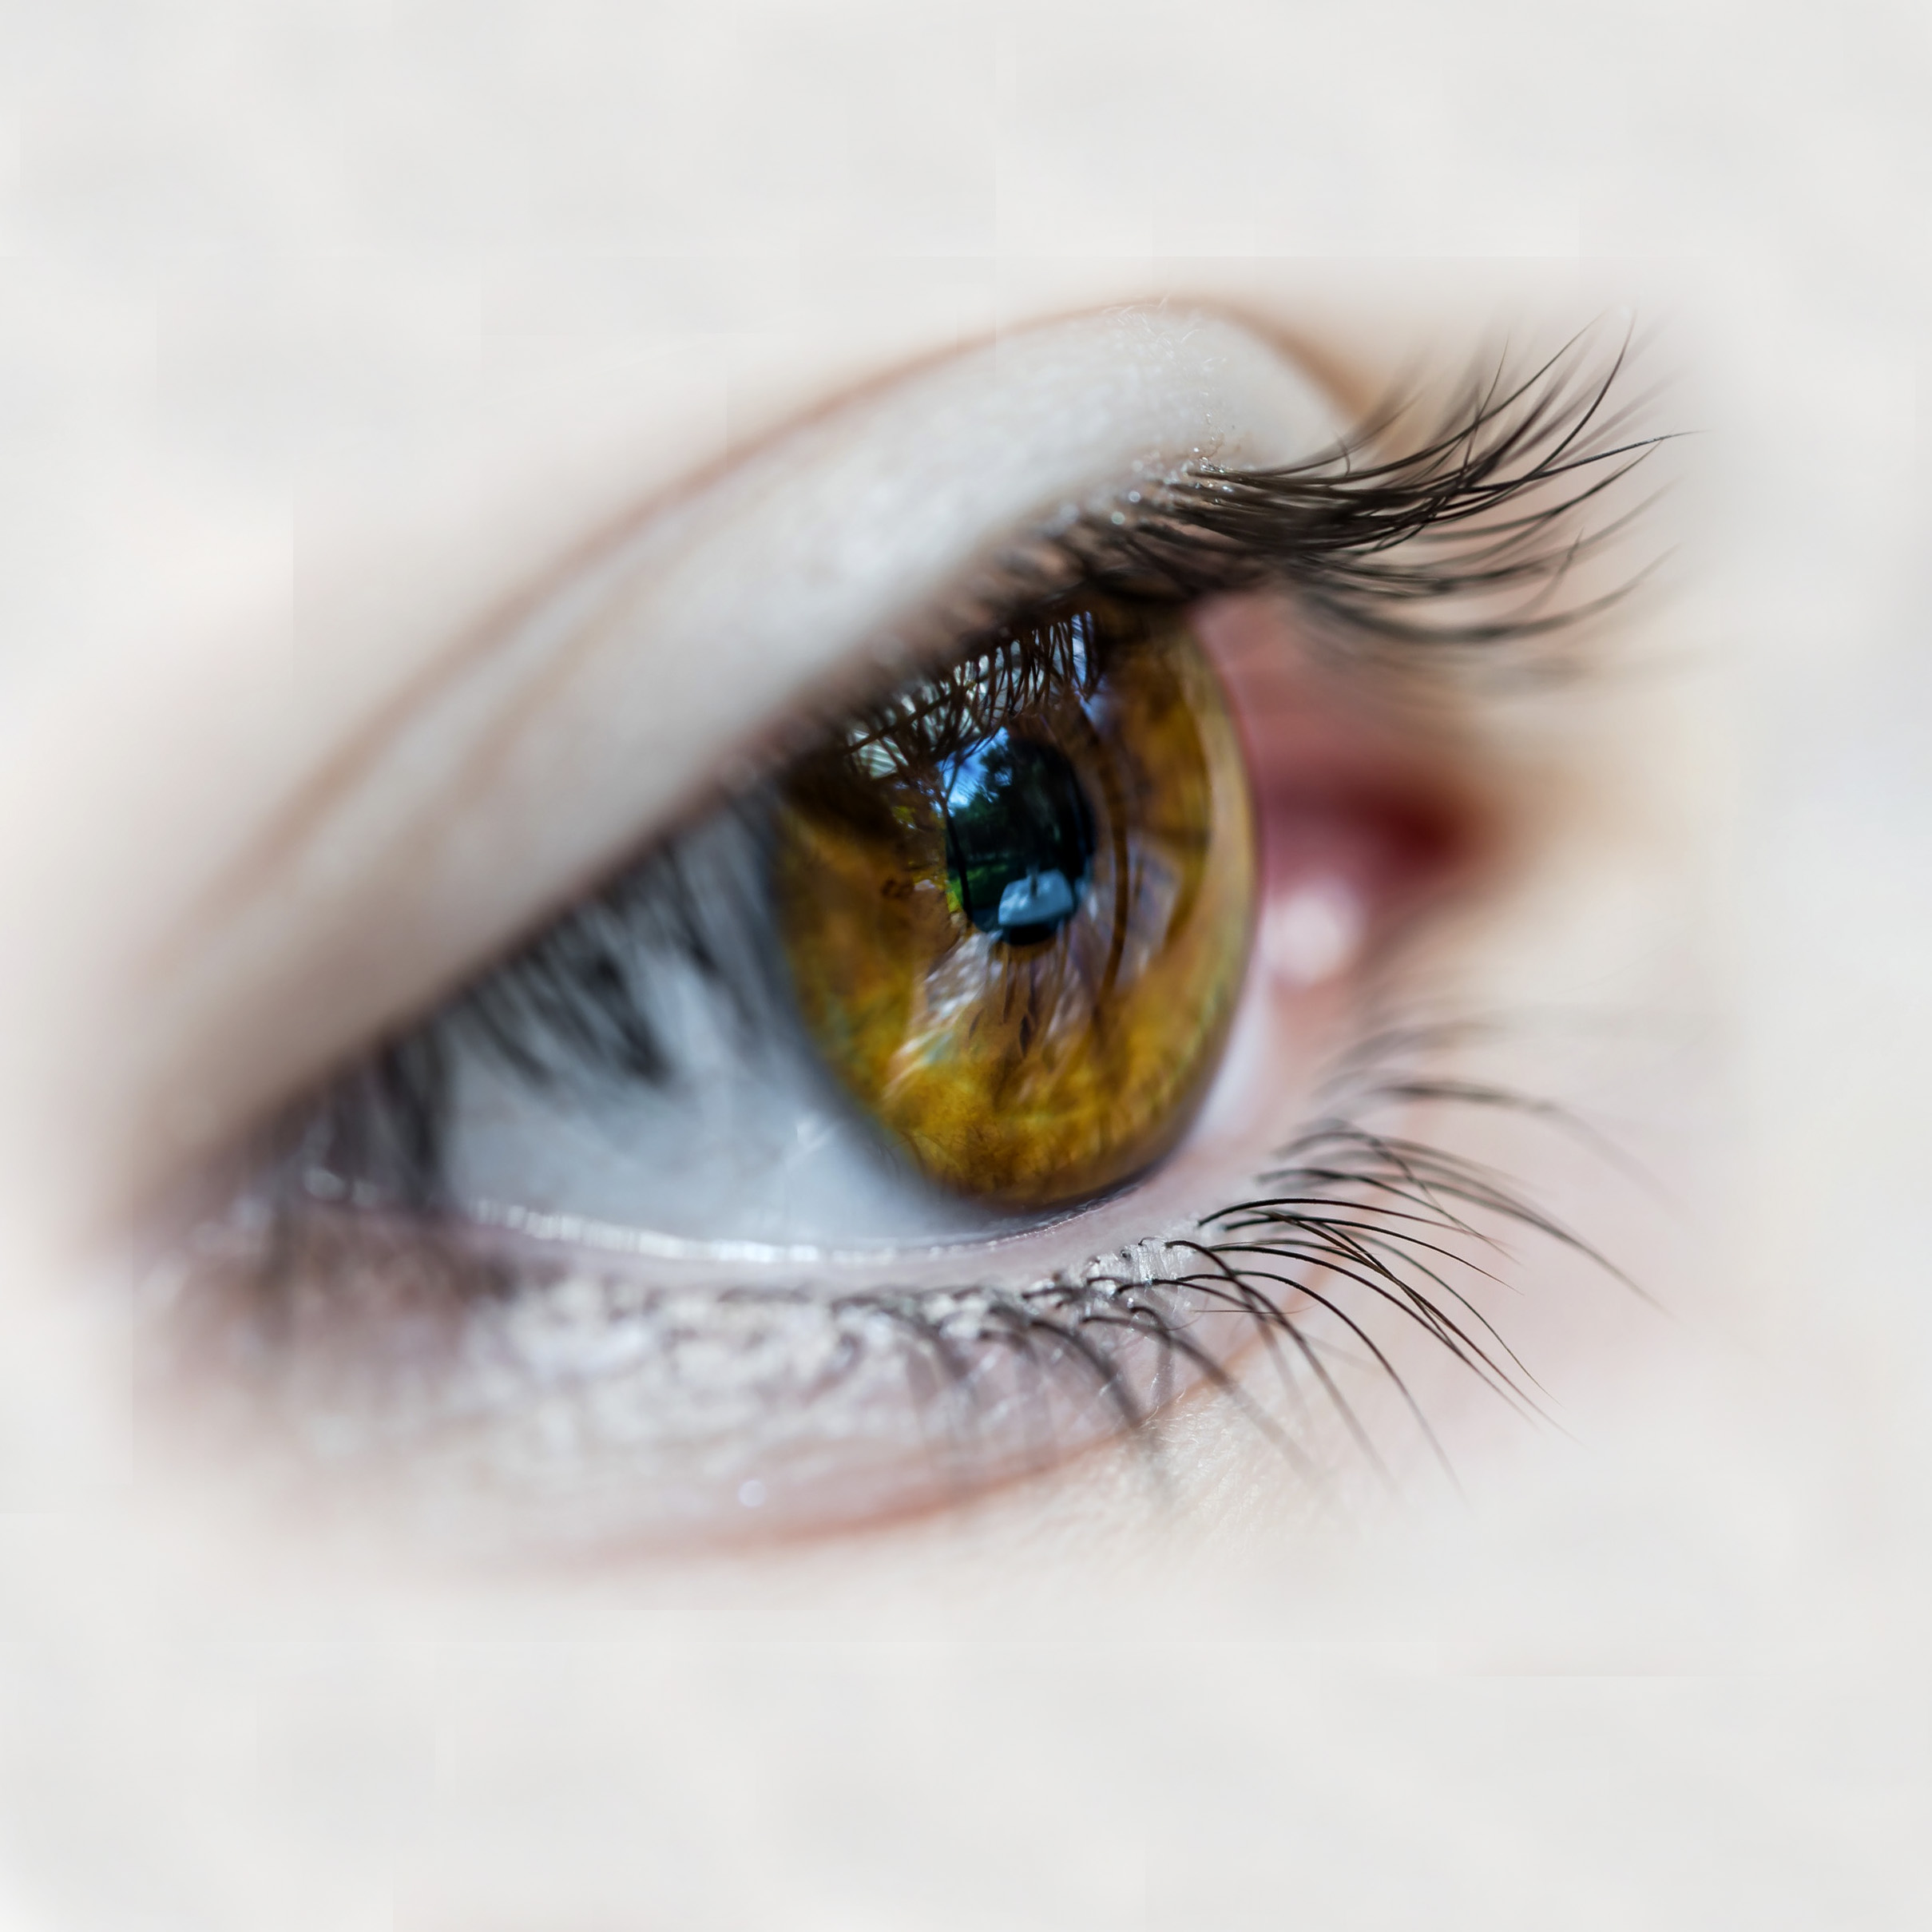 Eye Movement Desensitization and Reprocessing, Photo by Patrick Brinksma on Unsplash